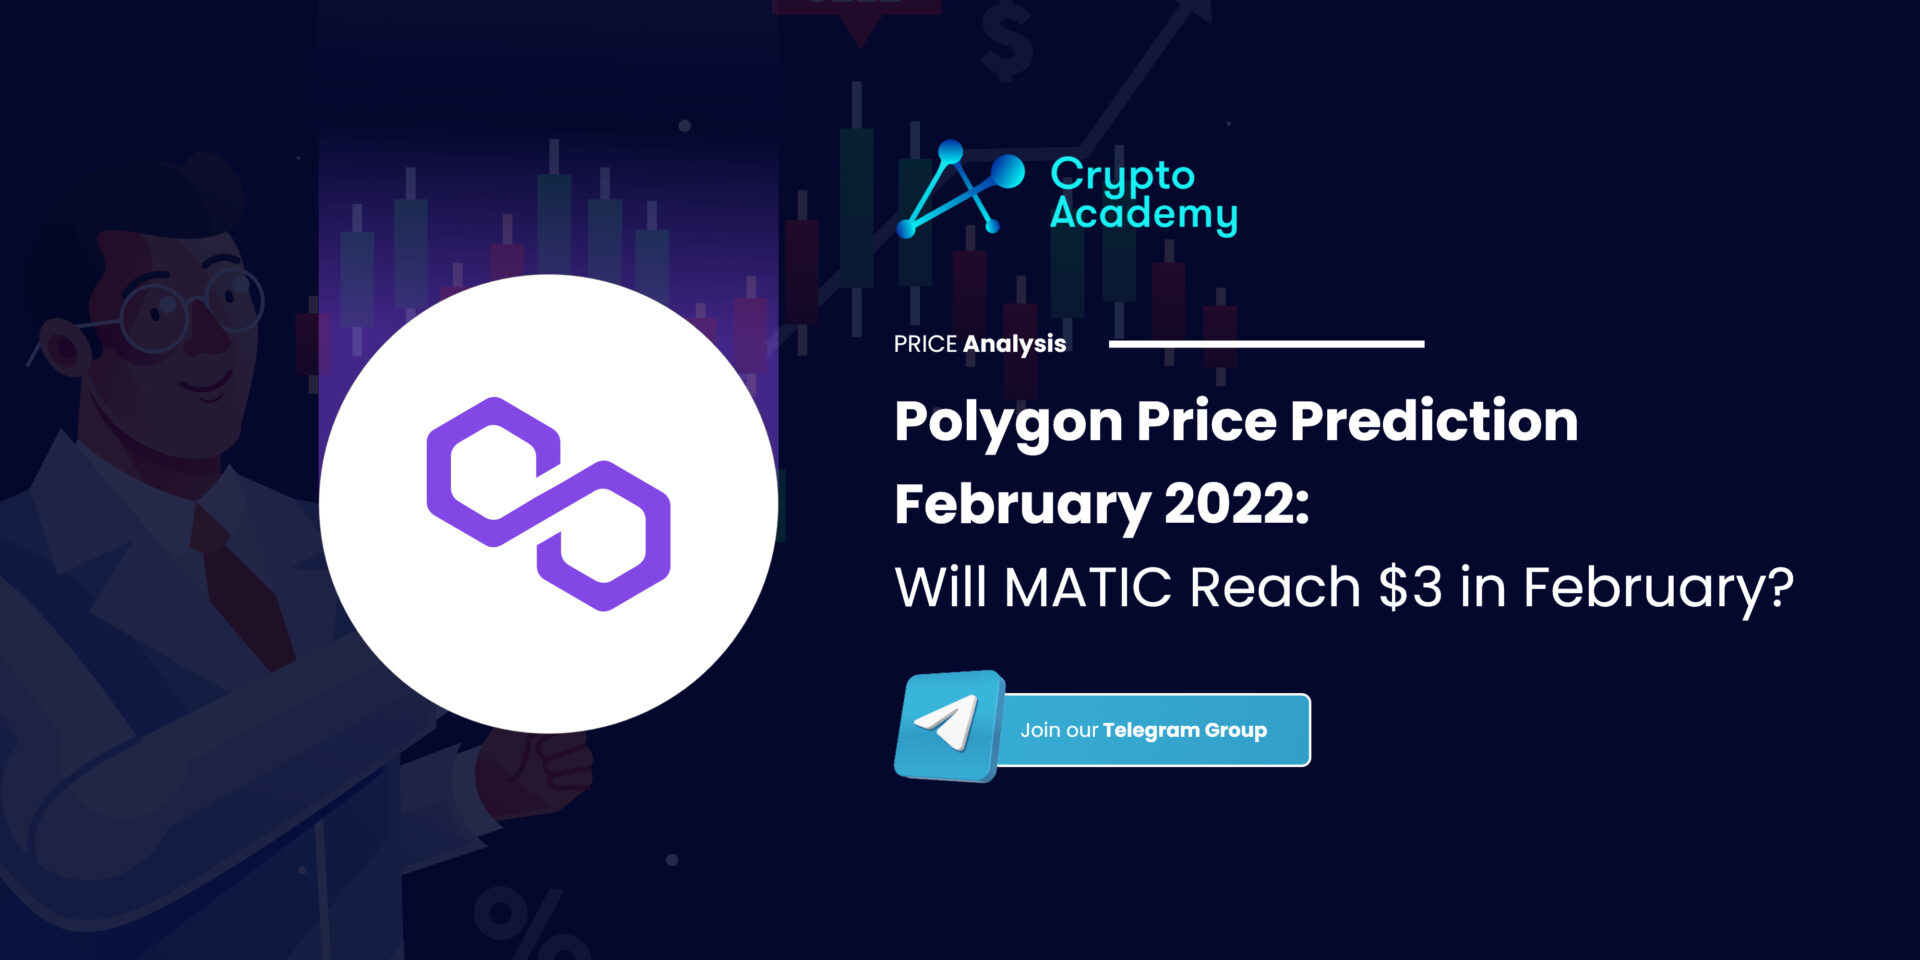 Polygon Price Prediction February 2022: Will MATIC Reach $3 in February?